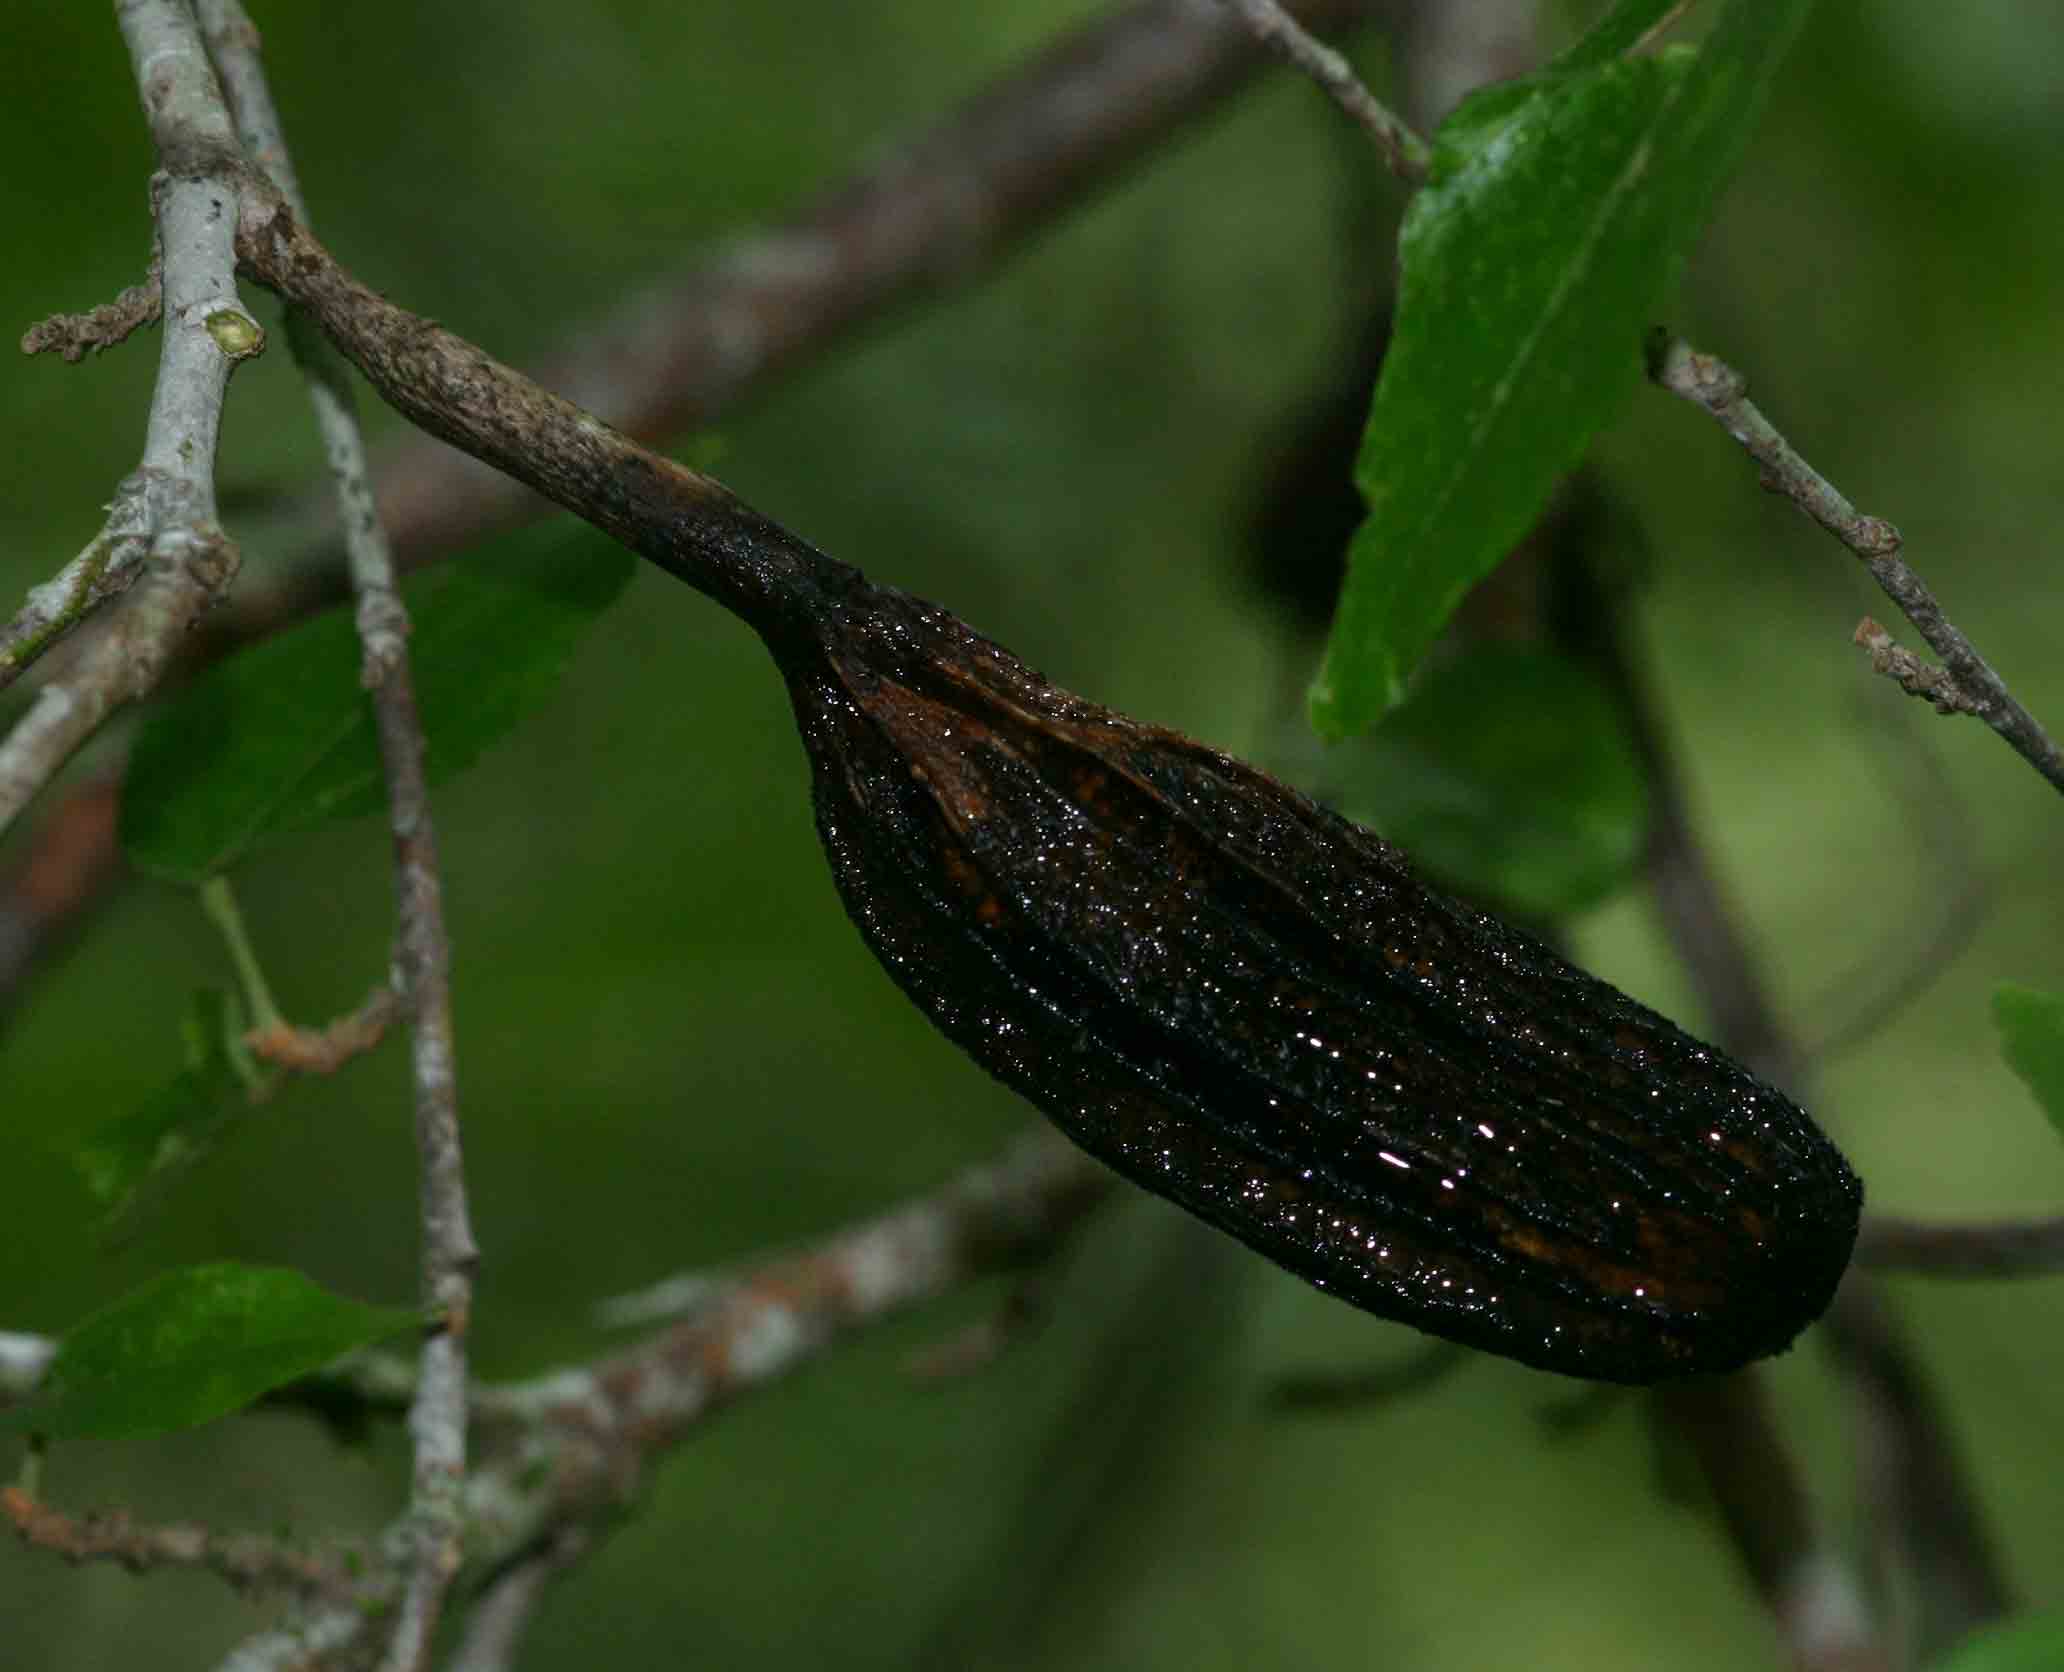 Glyphaea tomentosa